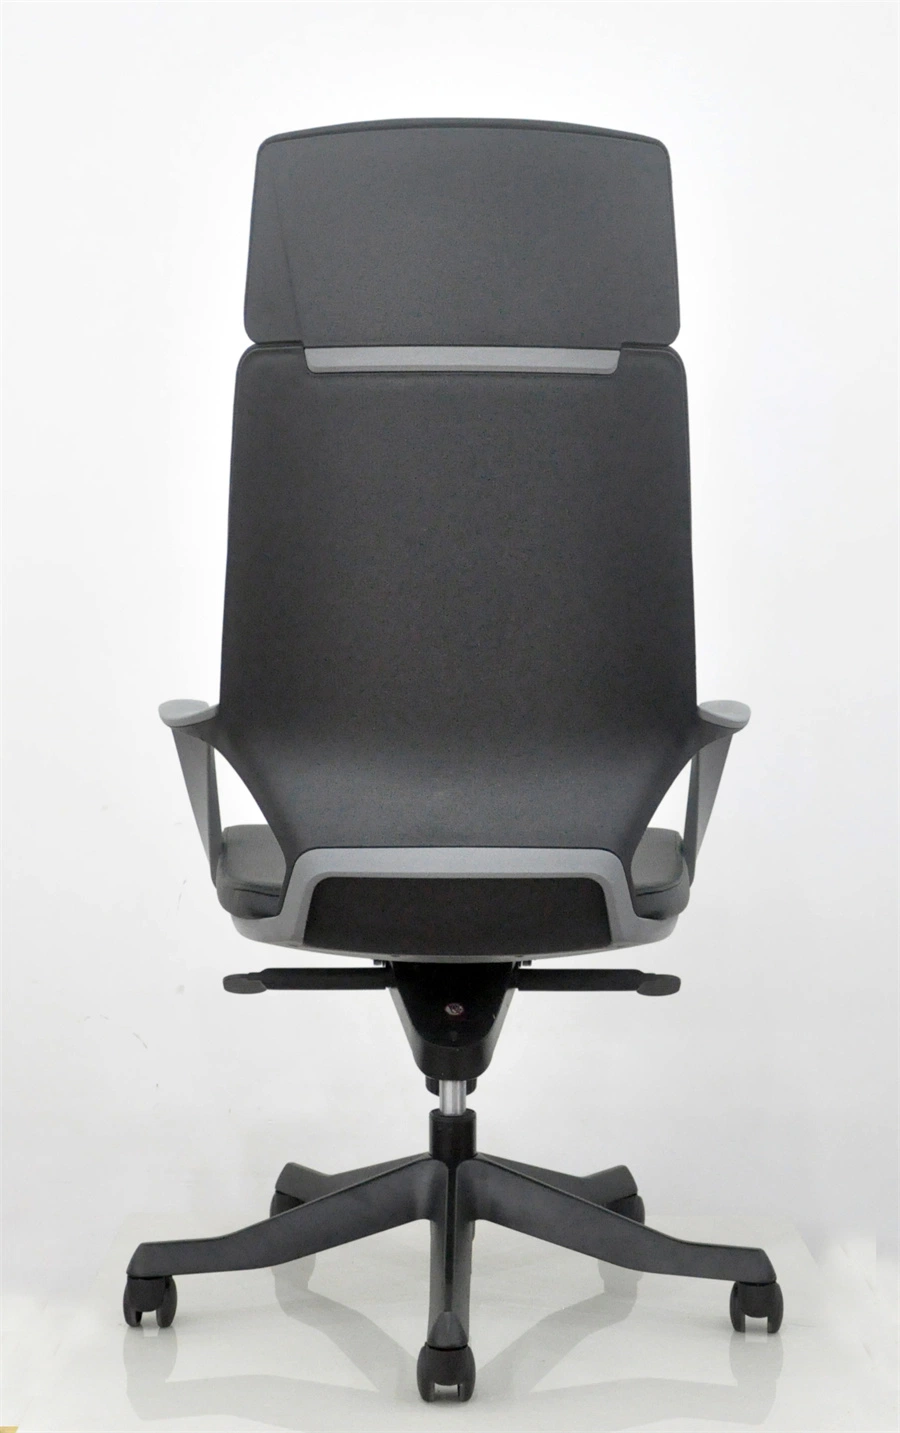 Black Cushion Plastic Cement Back High Back Ergonomic Gaming Chair